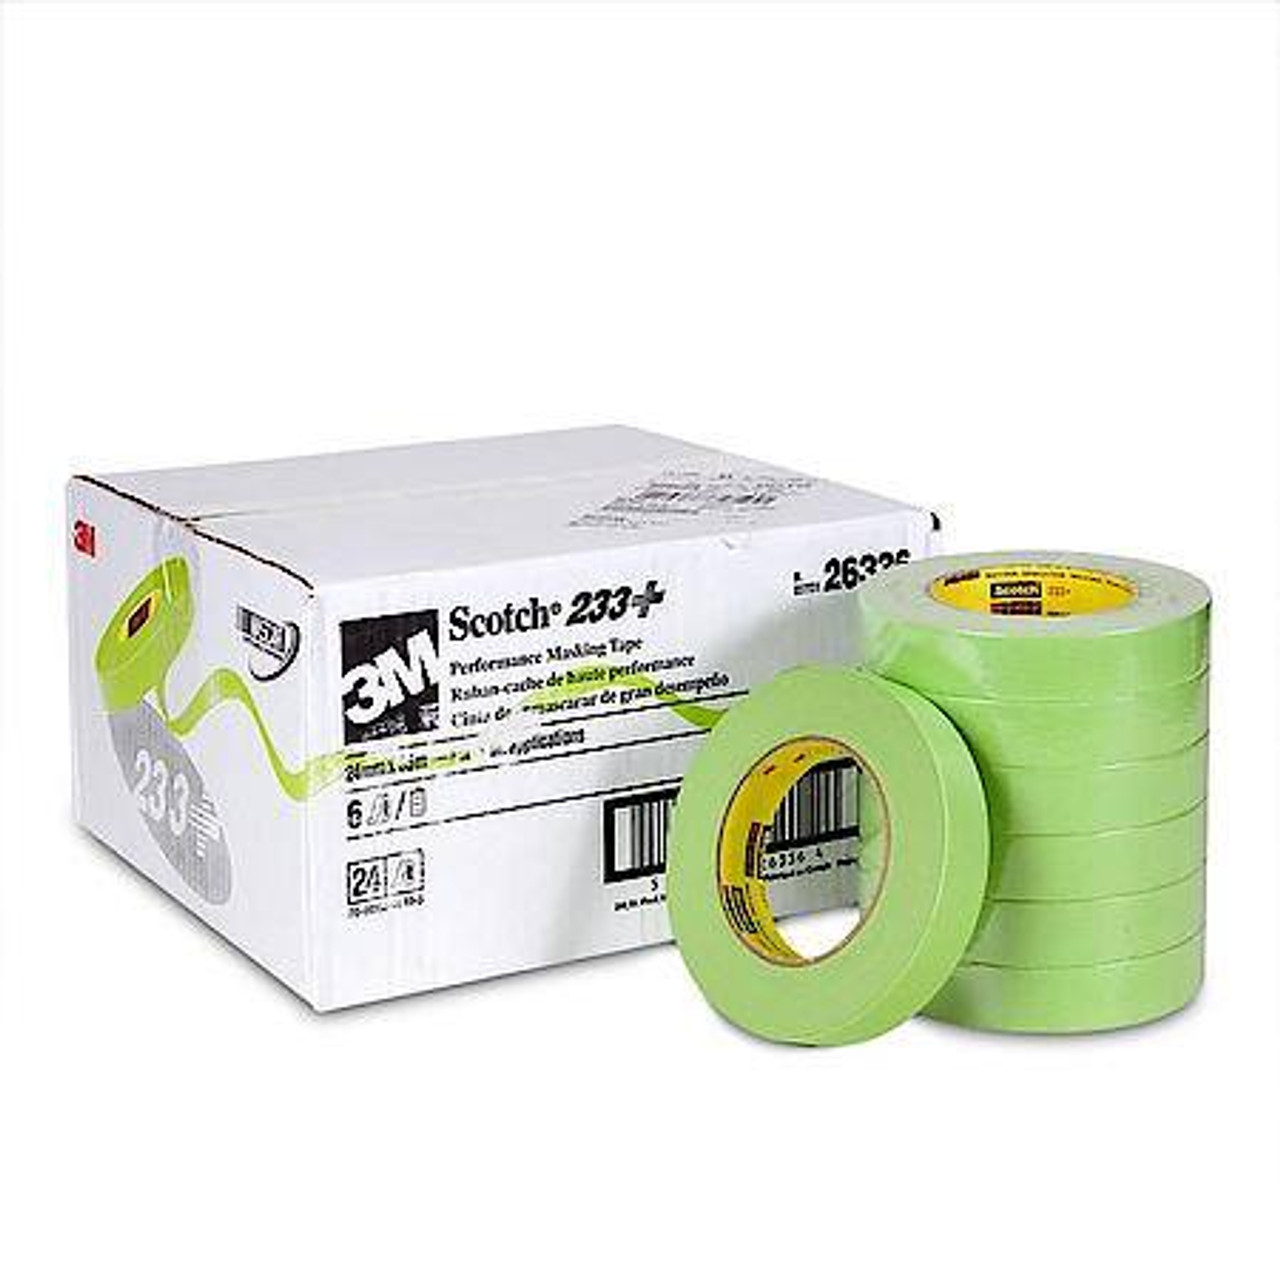 3M 26336 24mm x 55m Green Masking Tape Roll